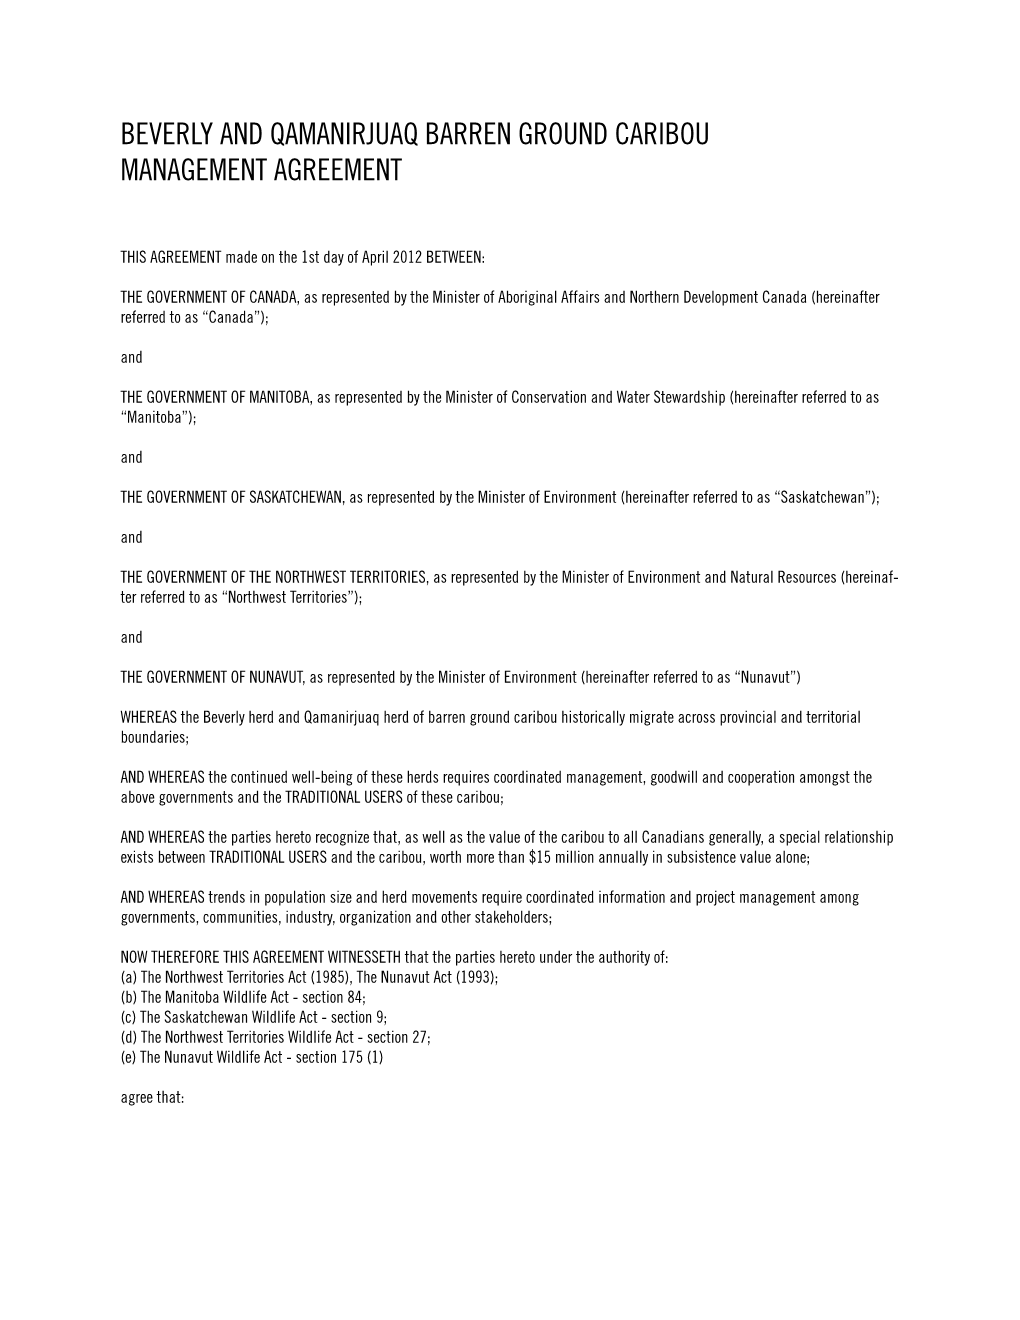 Beverly and Qamanirjuaq Barren Ground Caribou Management Agreement